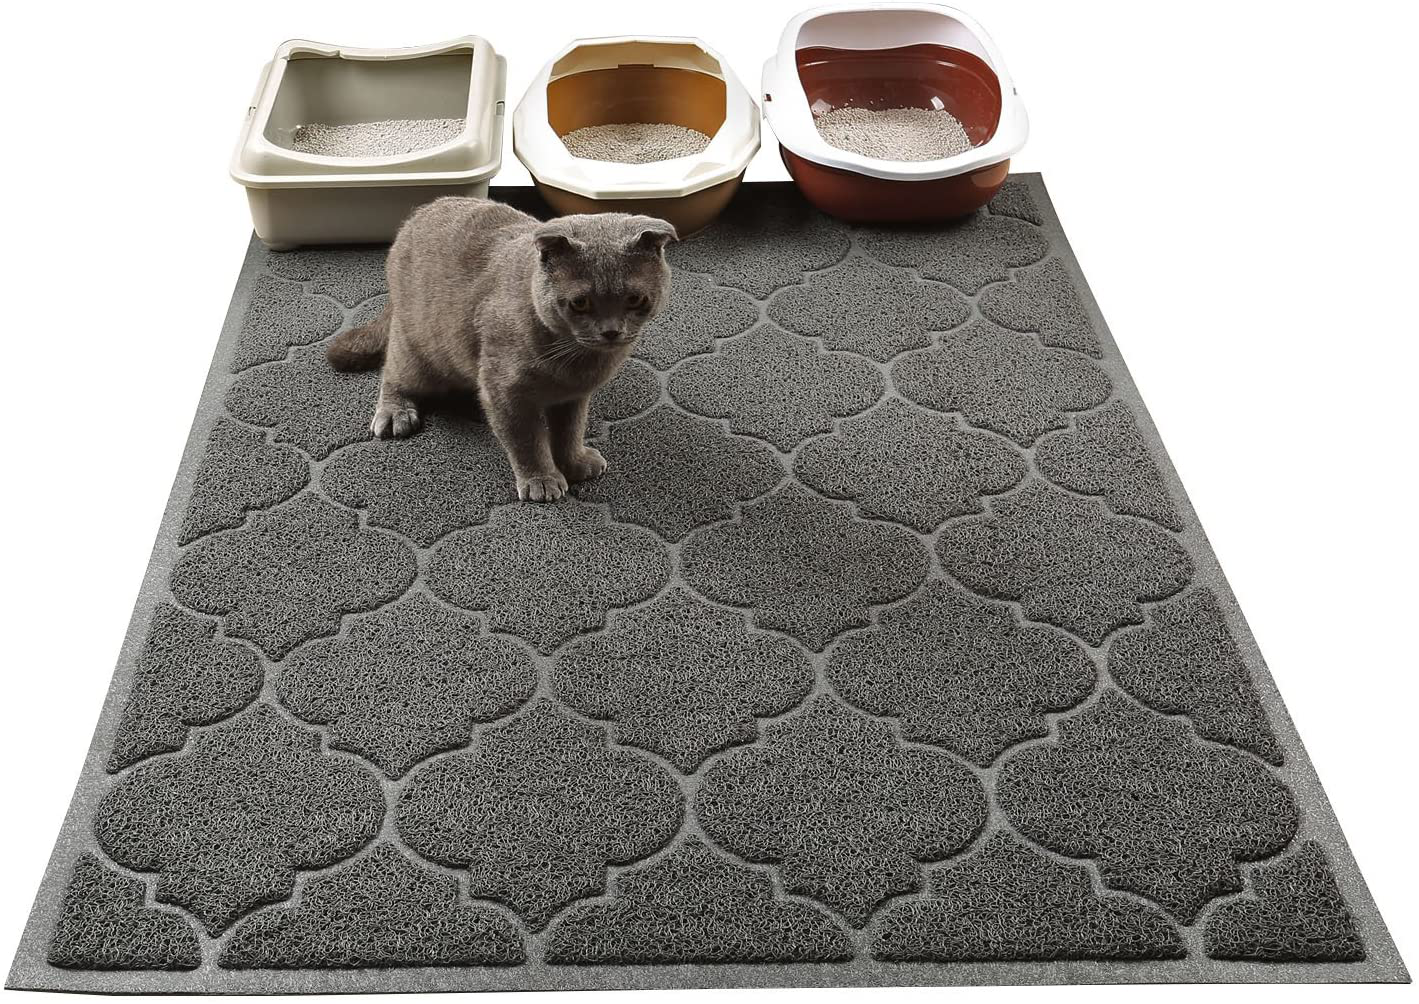 Cleanhouse Pets Cat Litter Mat (XL Size) - Non-Slip, Durable, Easy